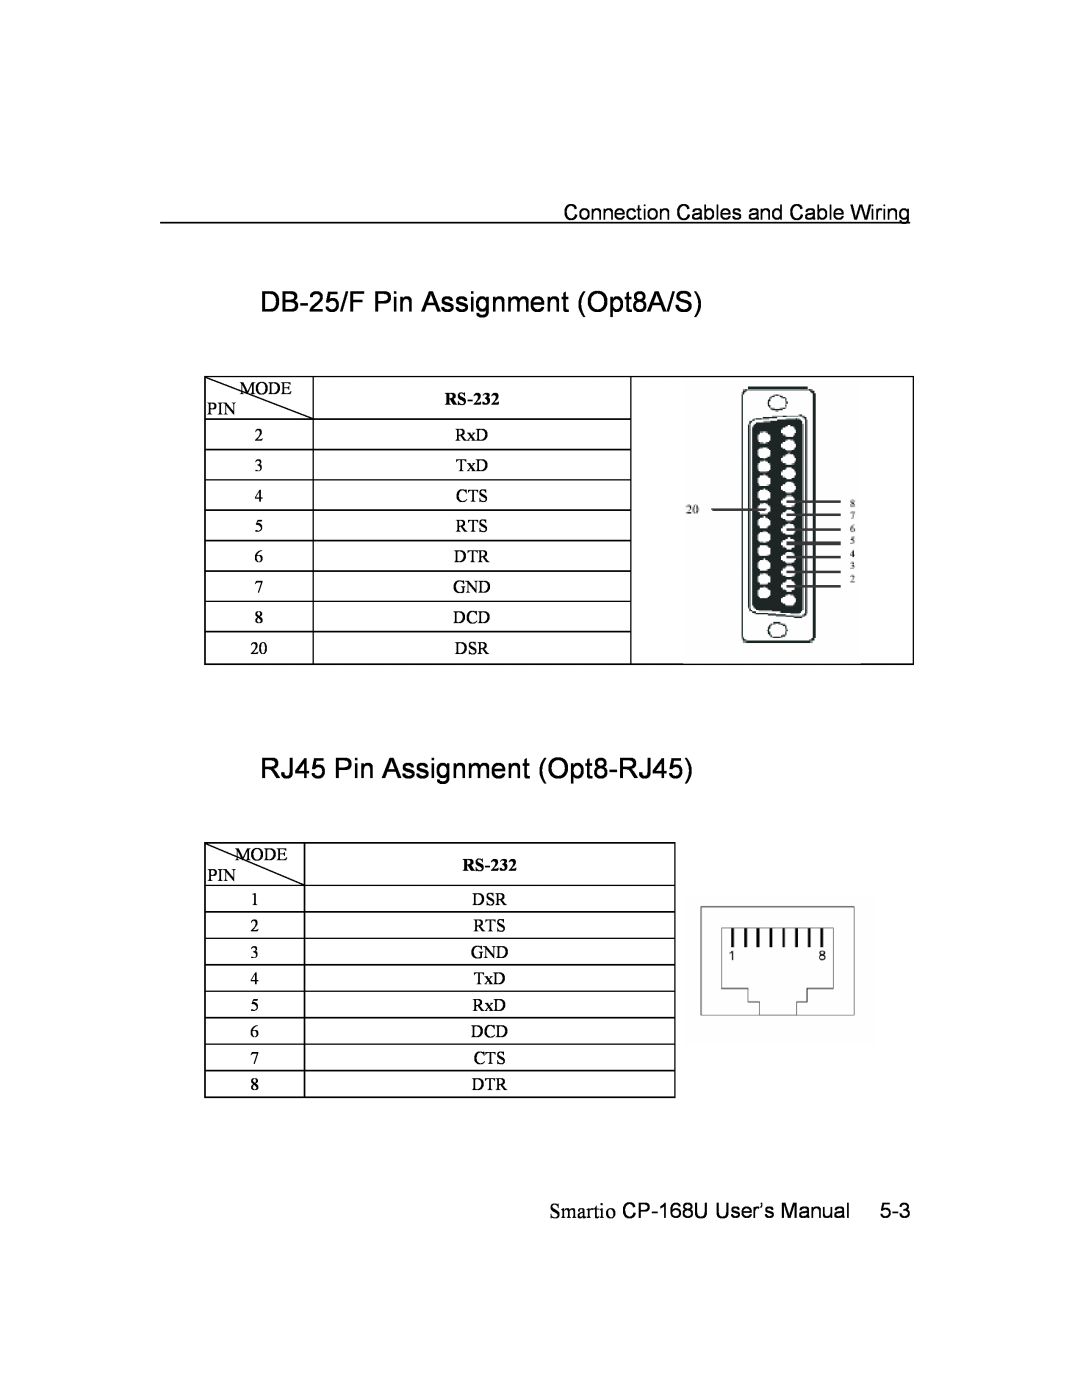 Moxa Technologies DB-25/F Pin Assignment Opt8A/S, RJ45 Pin Assignment Opt8-RJ45, Smartio CP-168U User’s Manual 